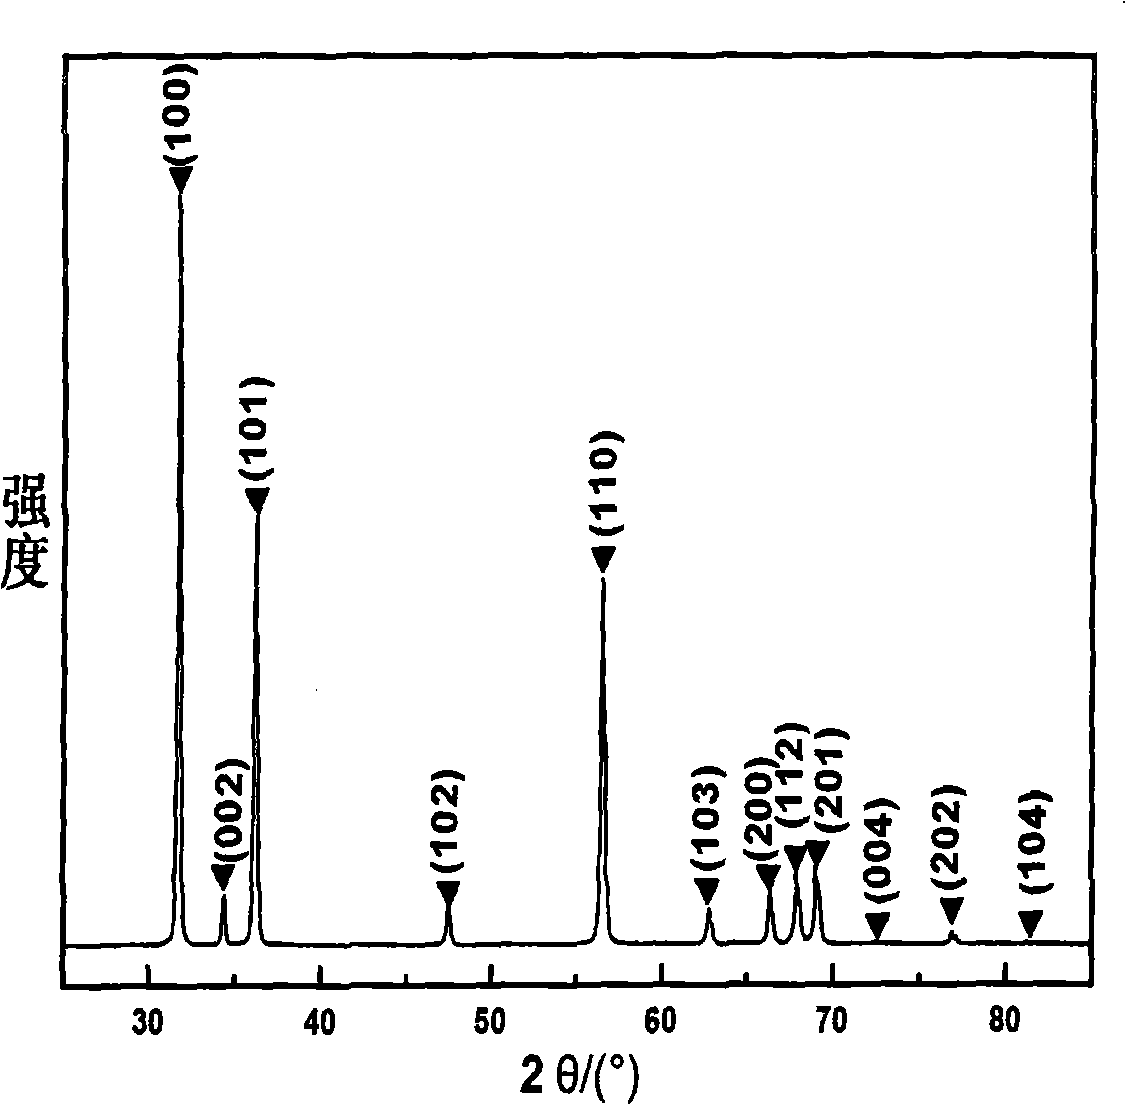 Method for preparing zinc oxide (ZnO) nanorods